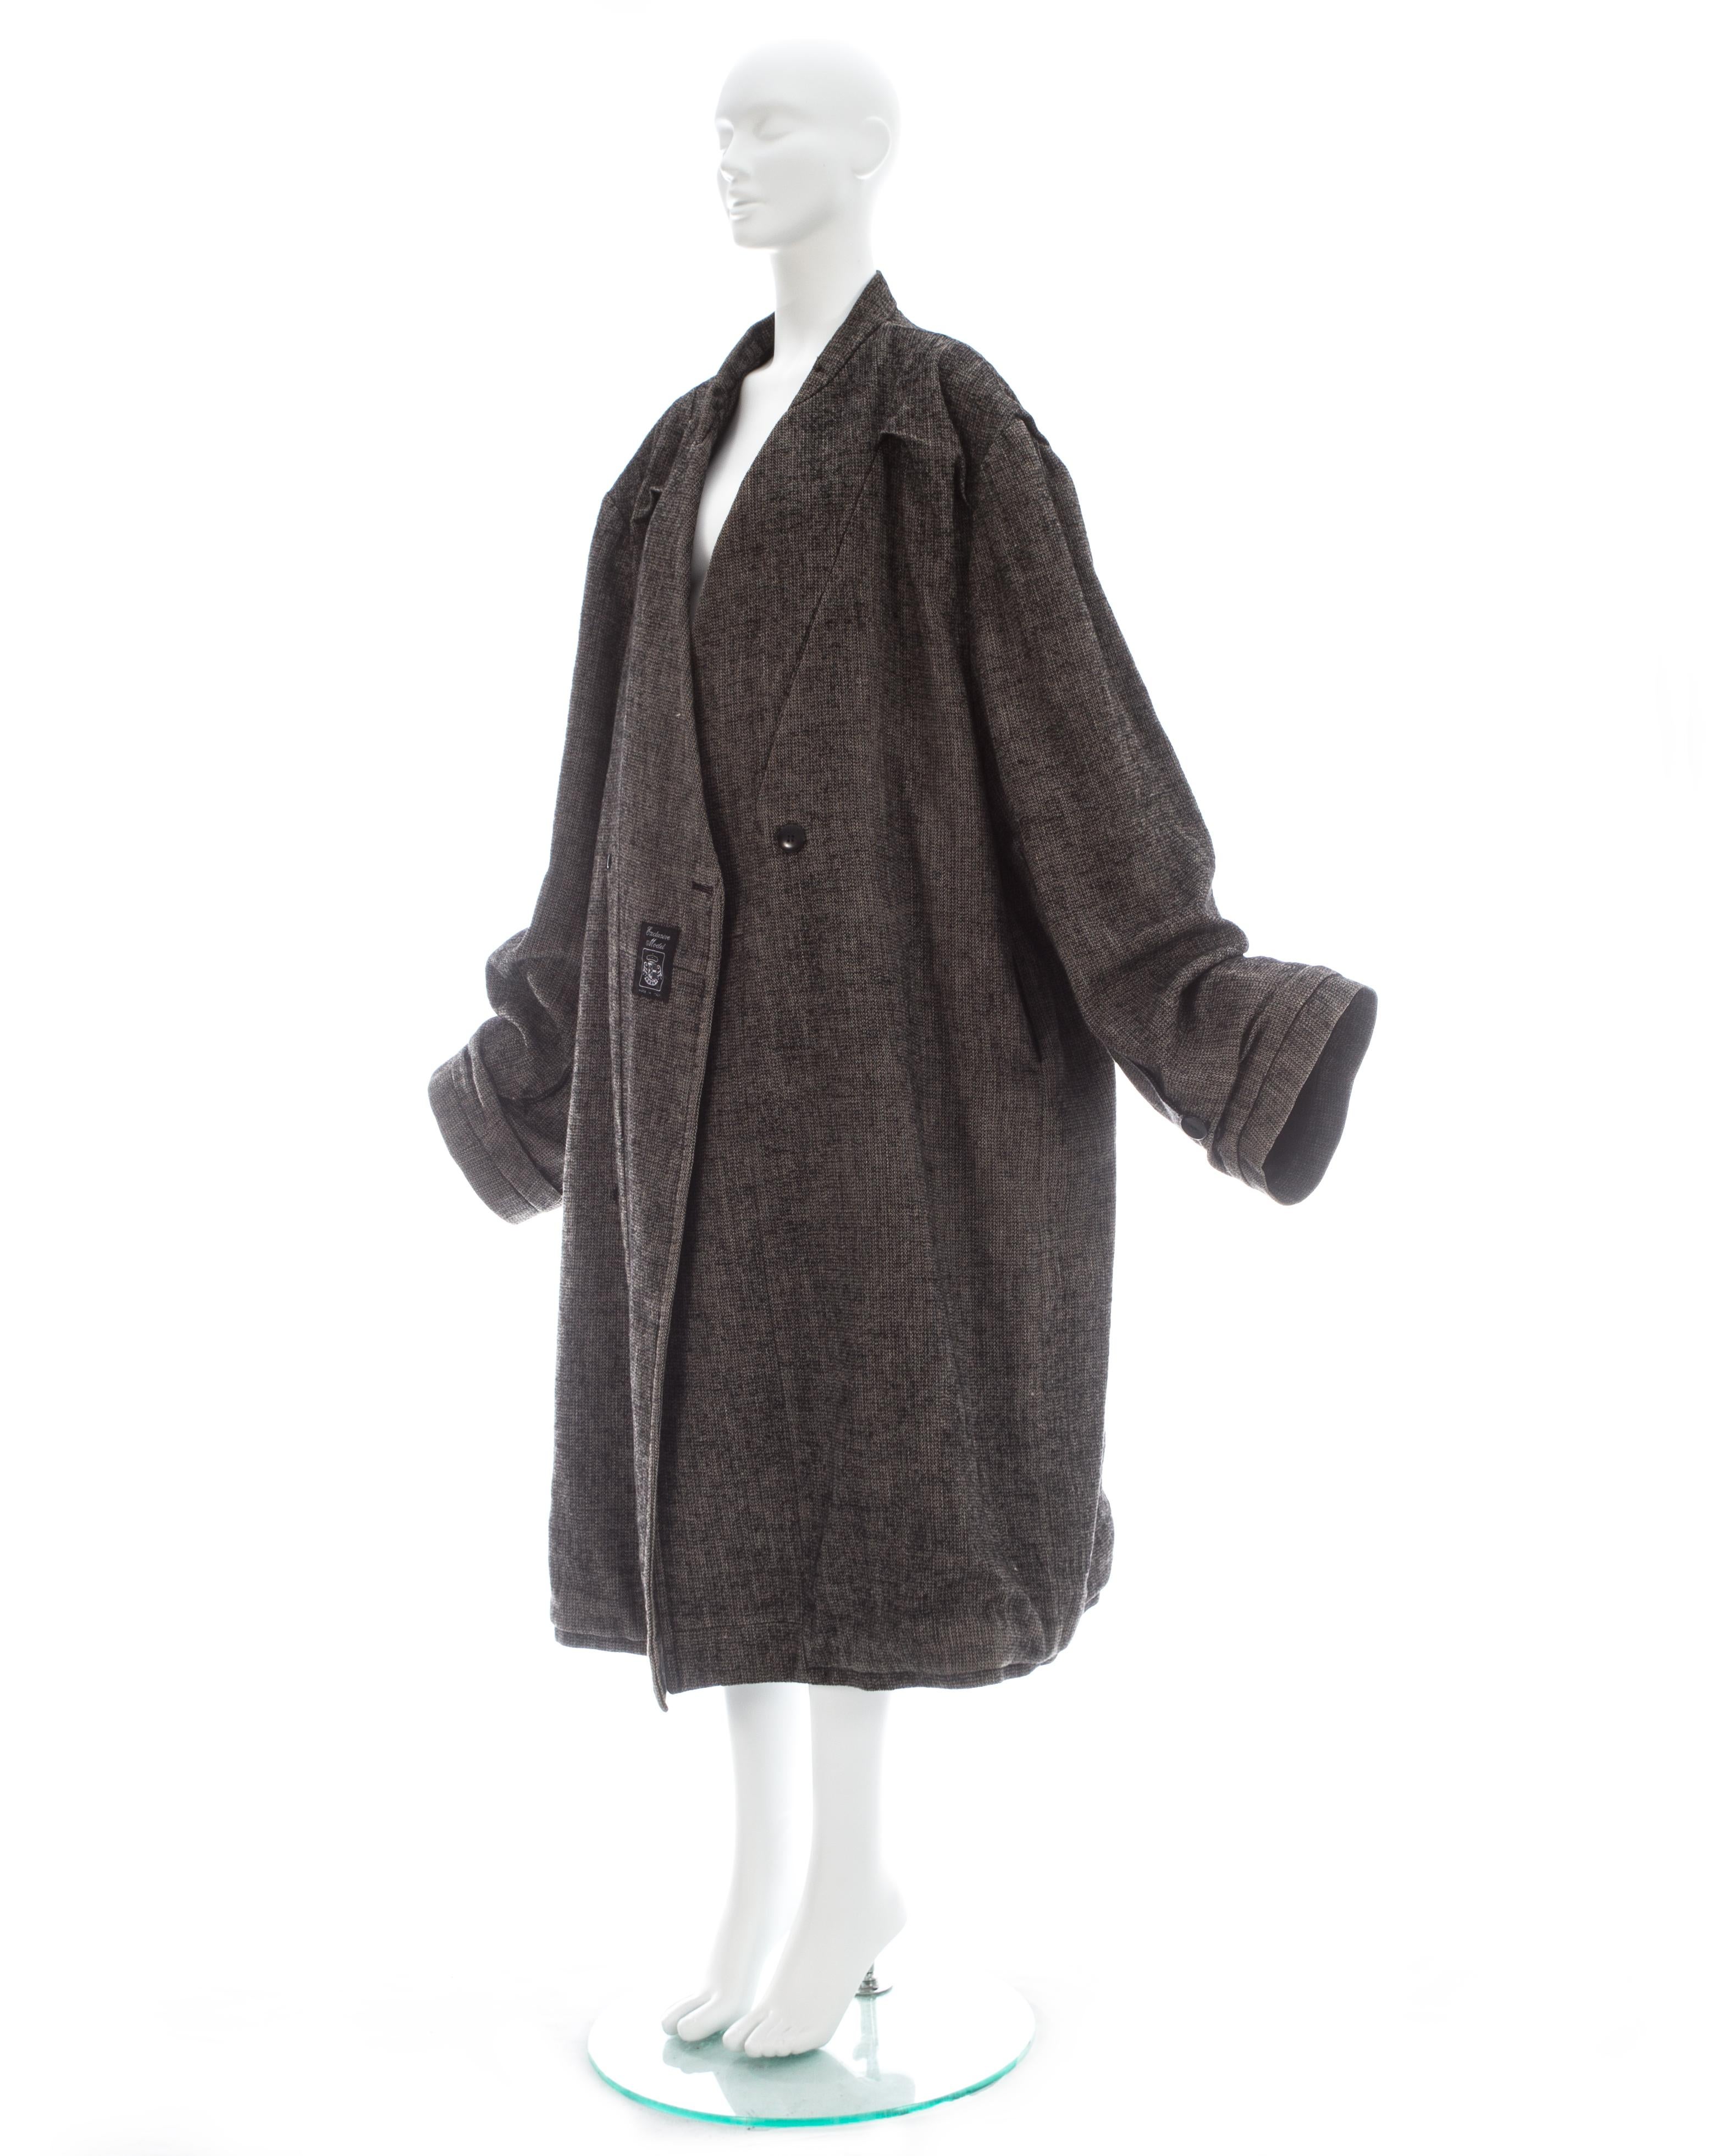 Martin Margiela grey wool and linen XXL size 78 double inside coat, fw 2000 For Sale 3